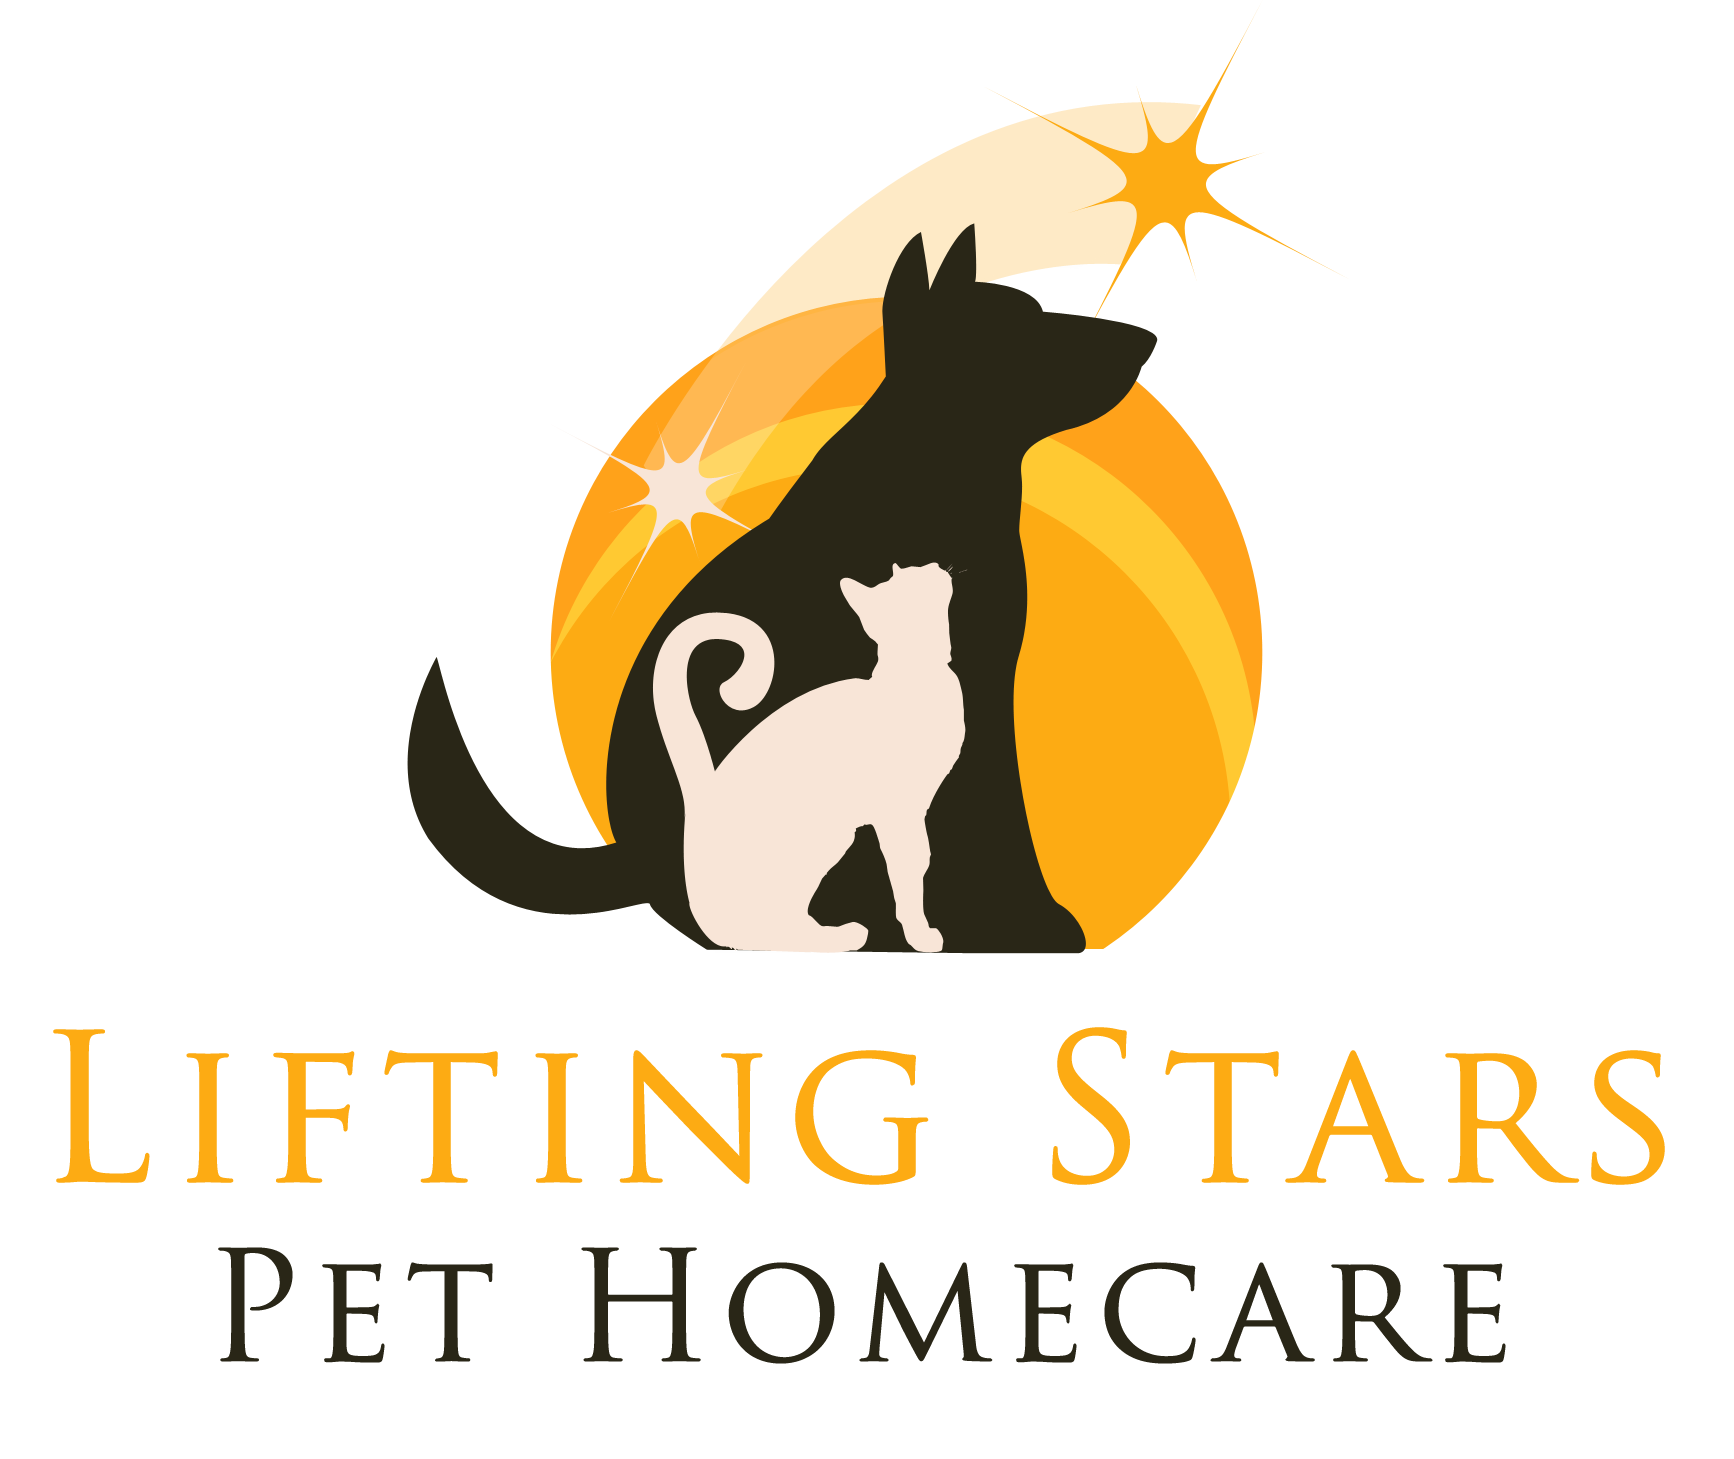 Lifting Stars Pet Homecare logo